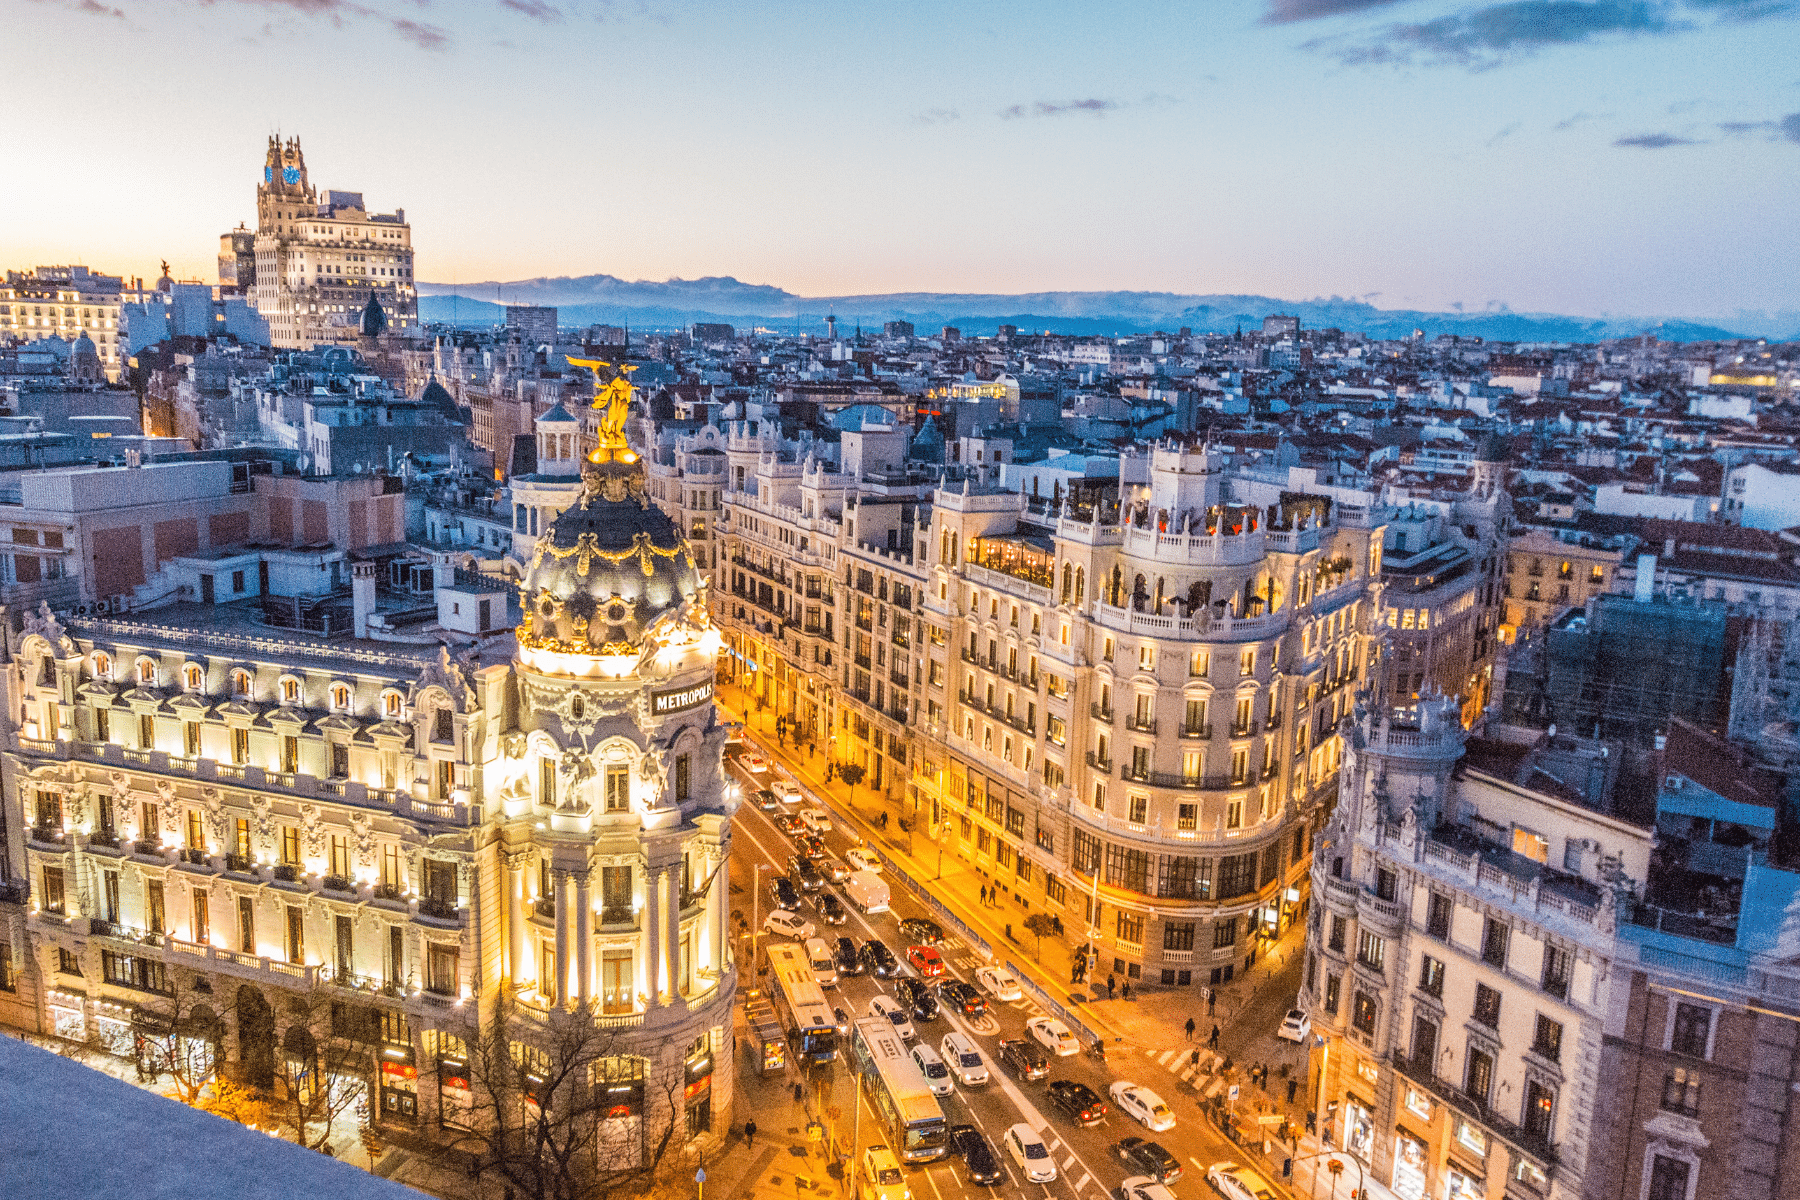 A bird's eye view of Madrid, Spain.